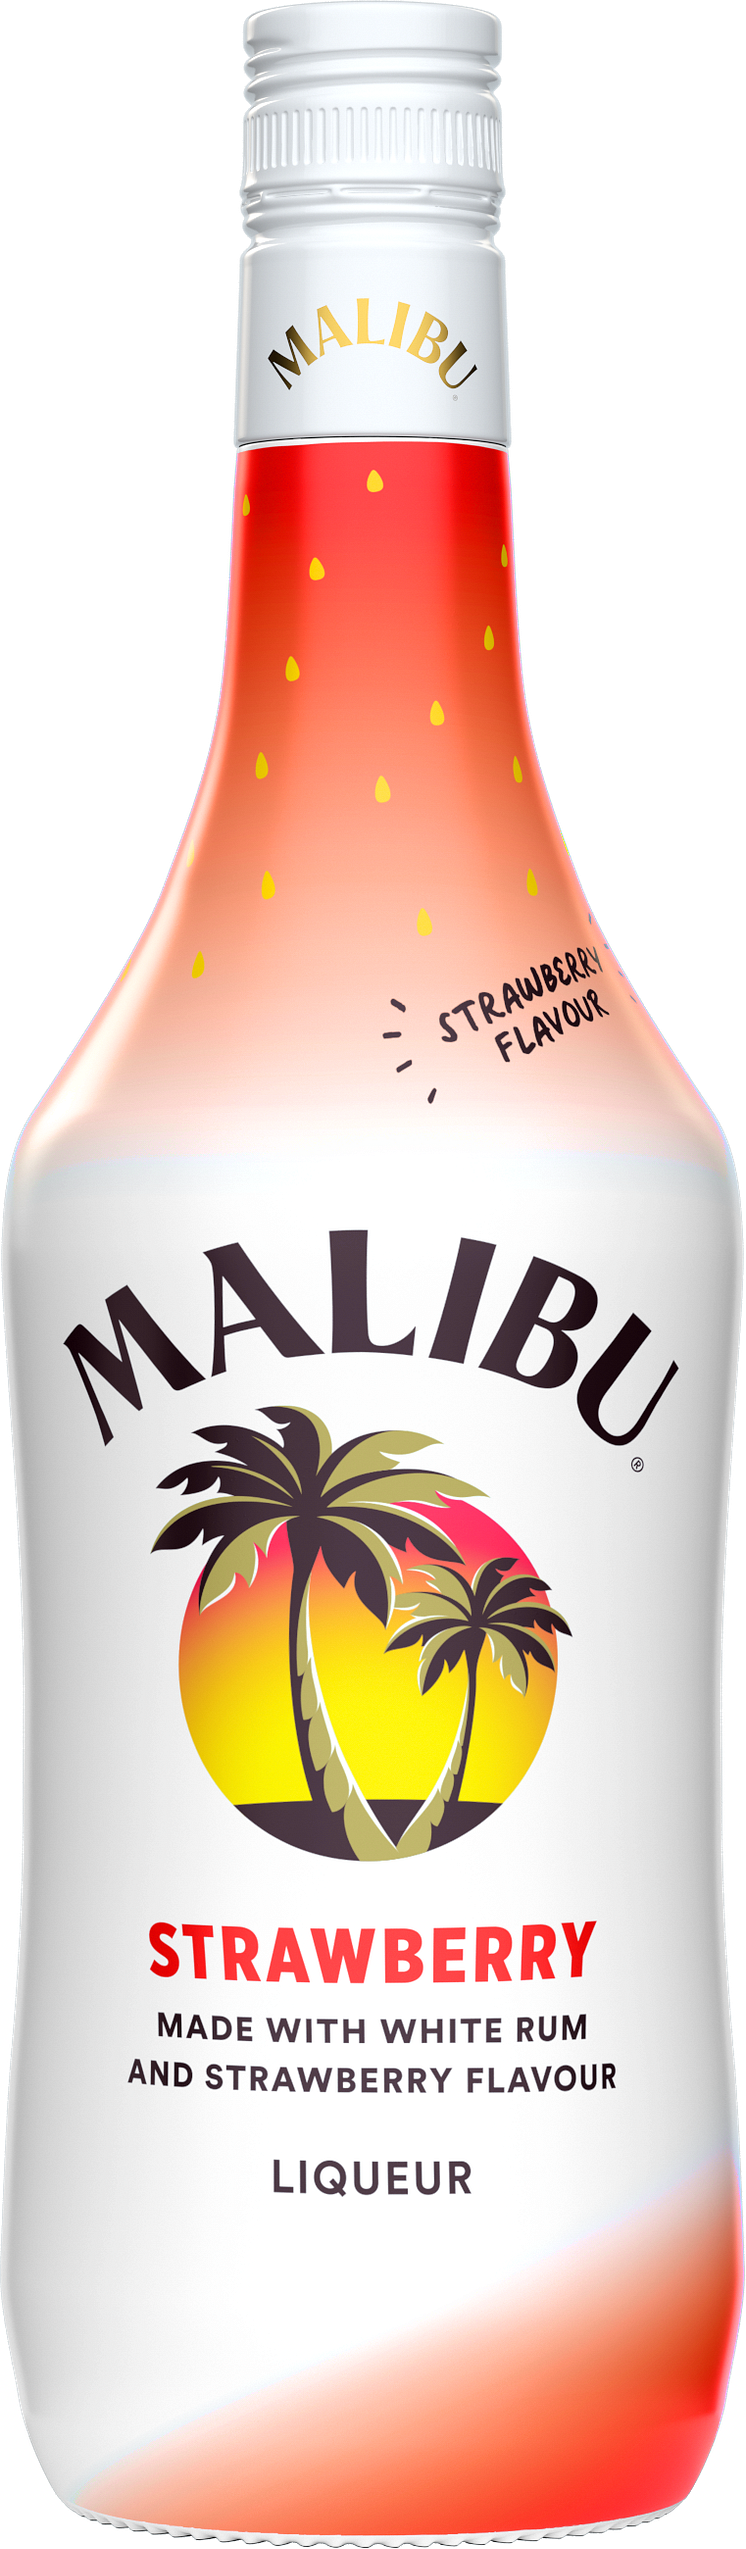 Malibu Strawberry_Summer calls for berry vibes